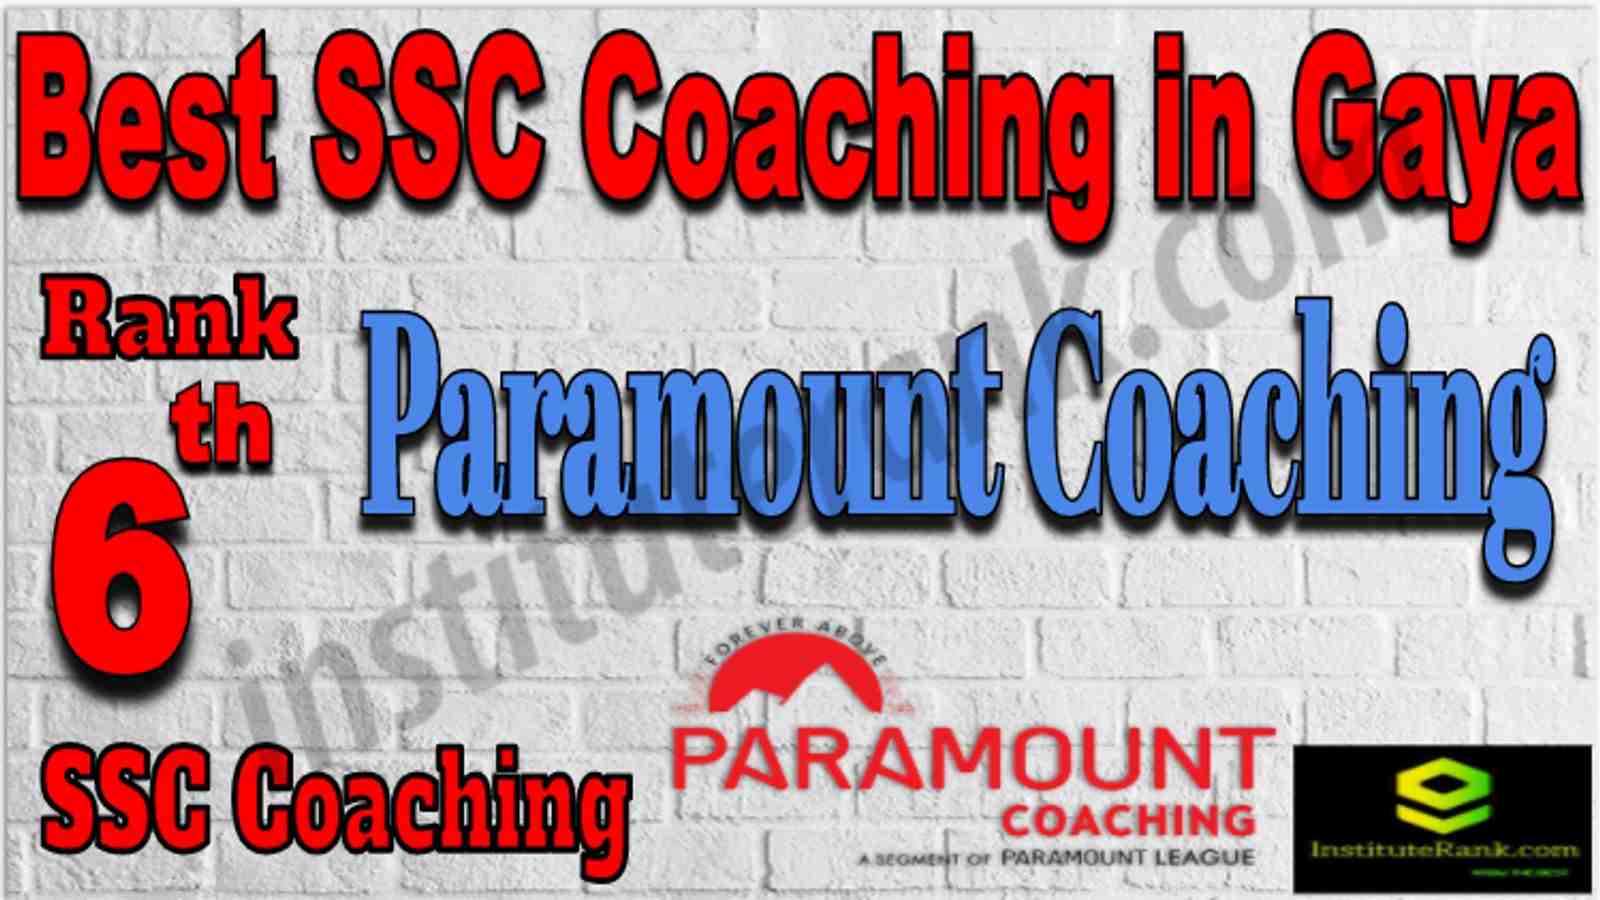 Rank 6 Best SSC Coaching in Gaya